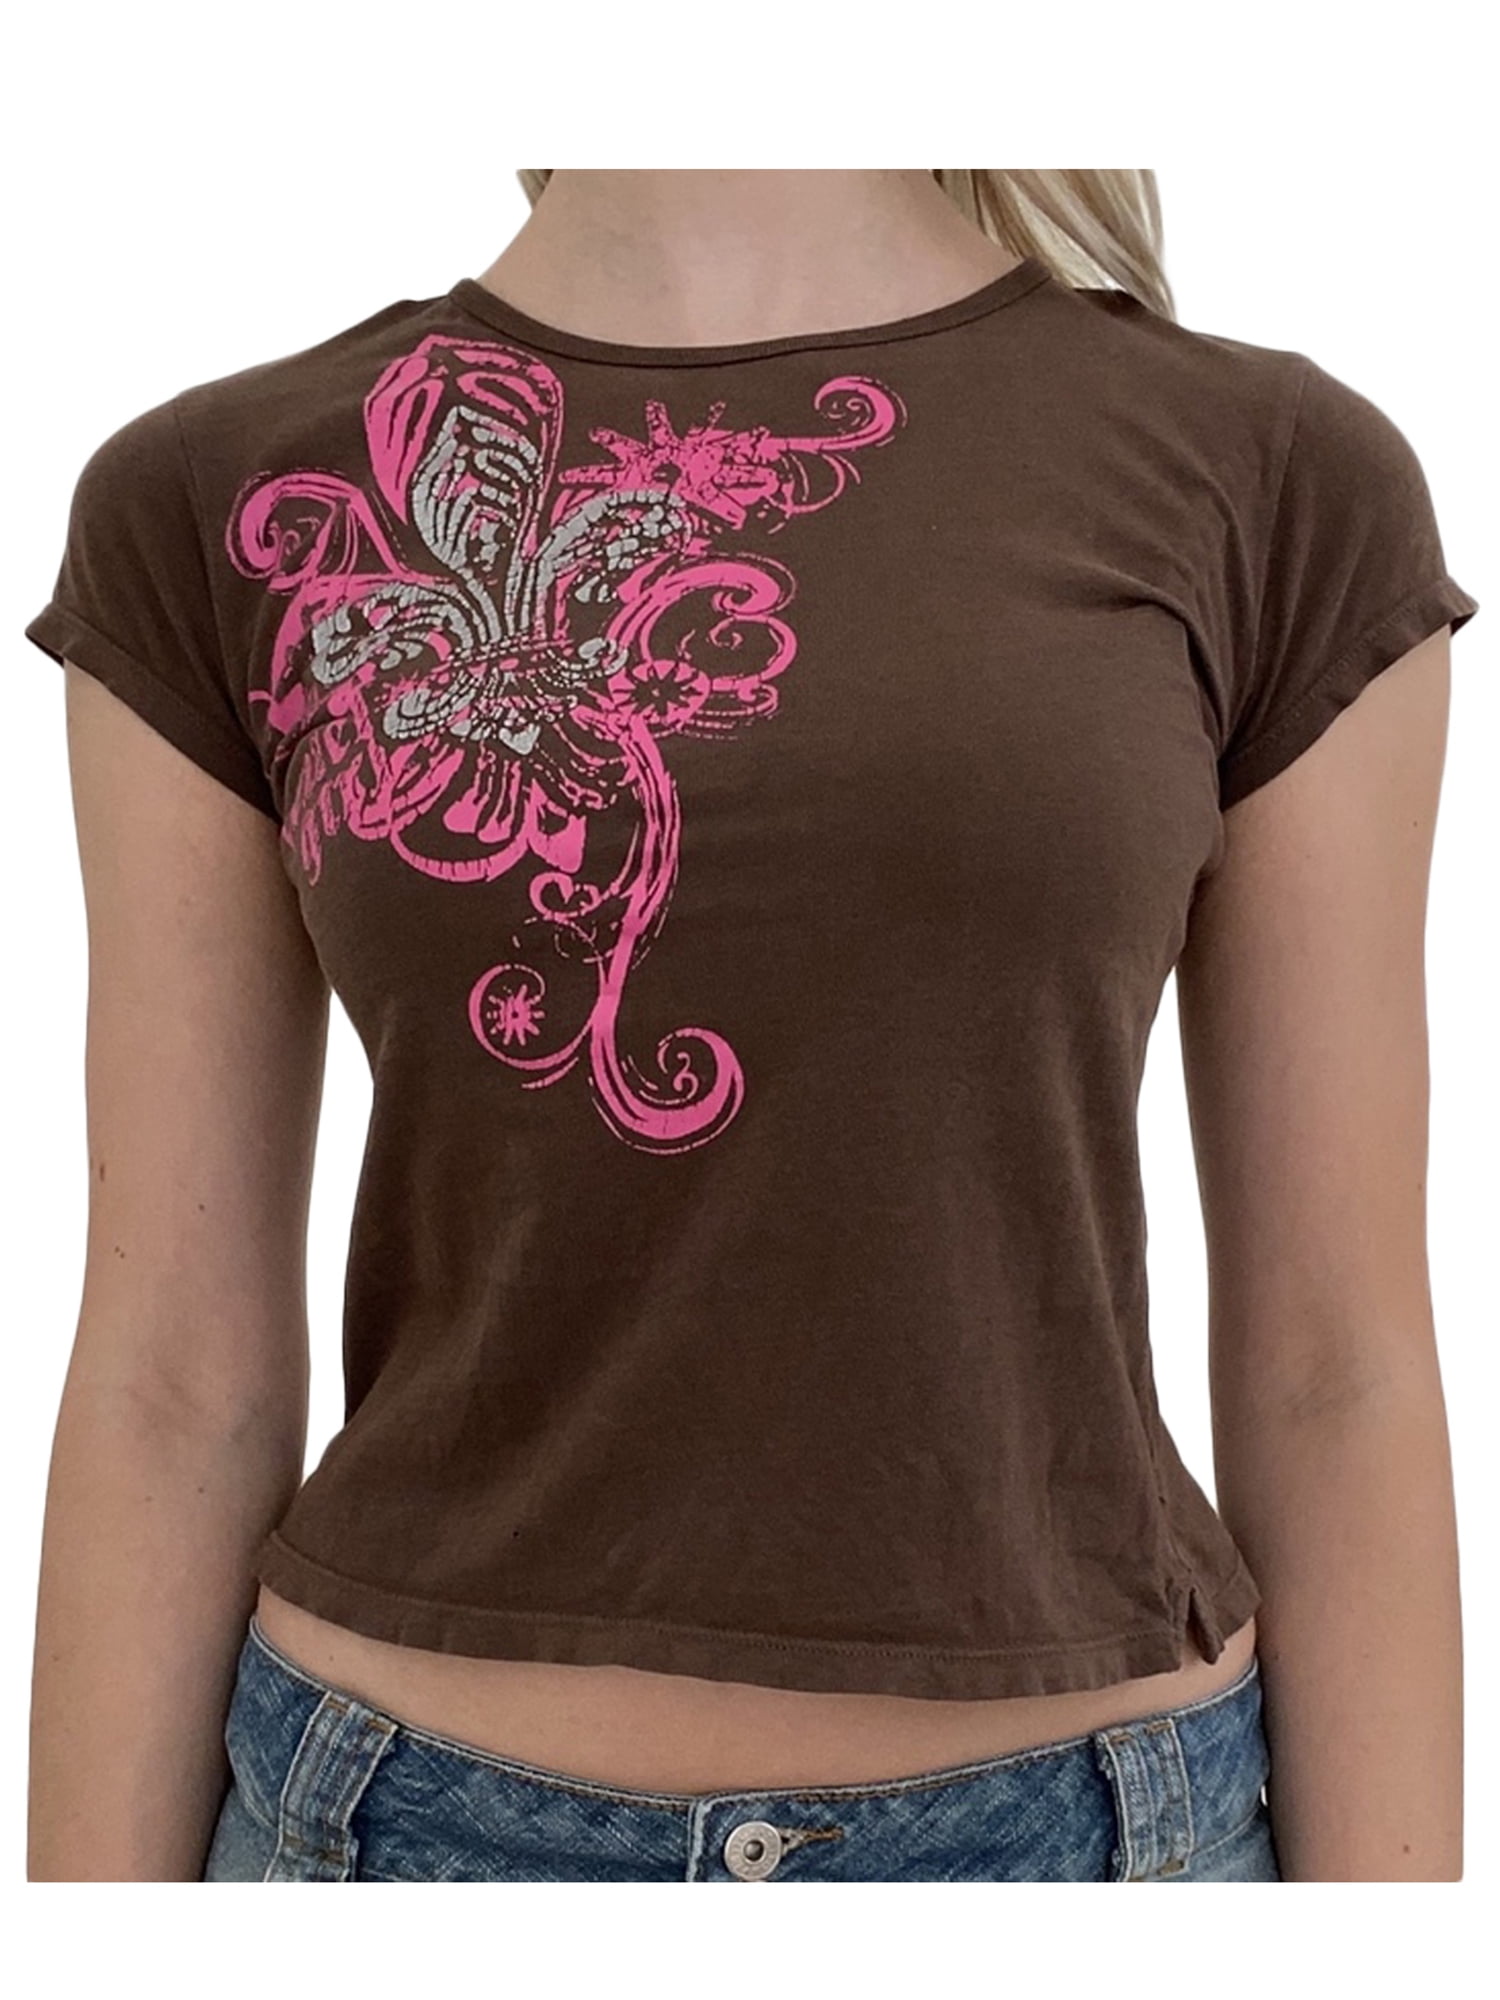 Women Teen Girl Y2k Fashion Top Clothes Cute Graphic Print Brown Crop Top  Tee T-Shirt E Girl Clothing Aesthetic 